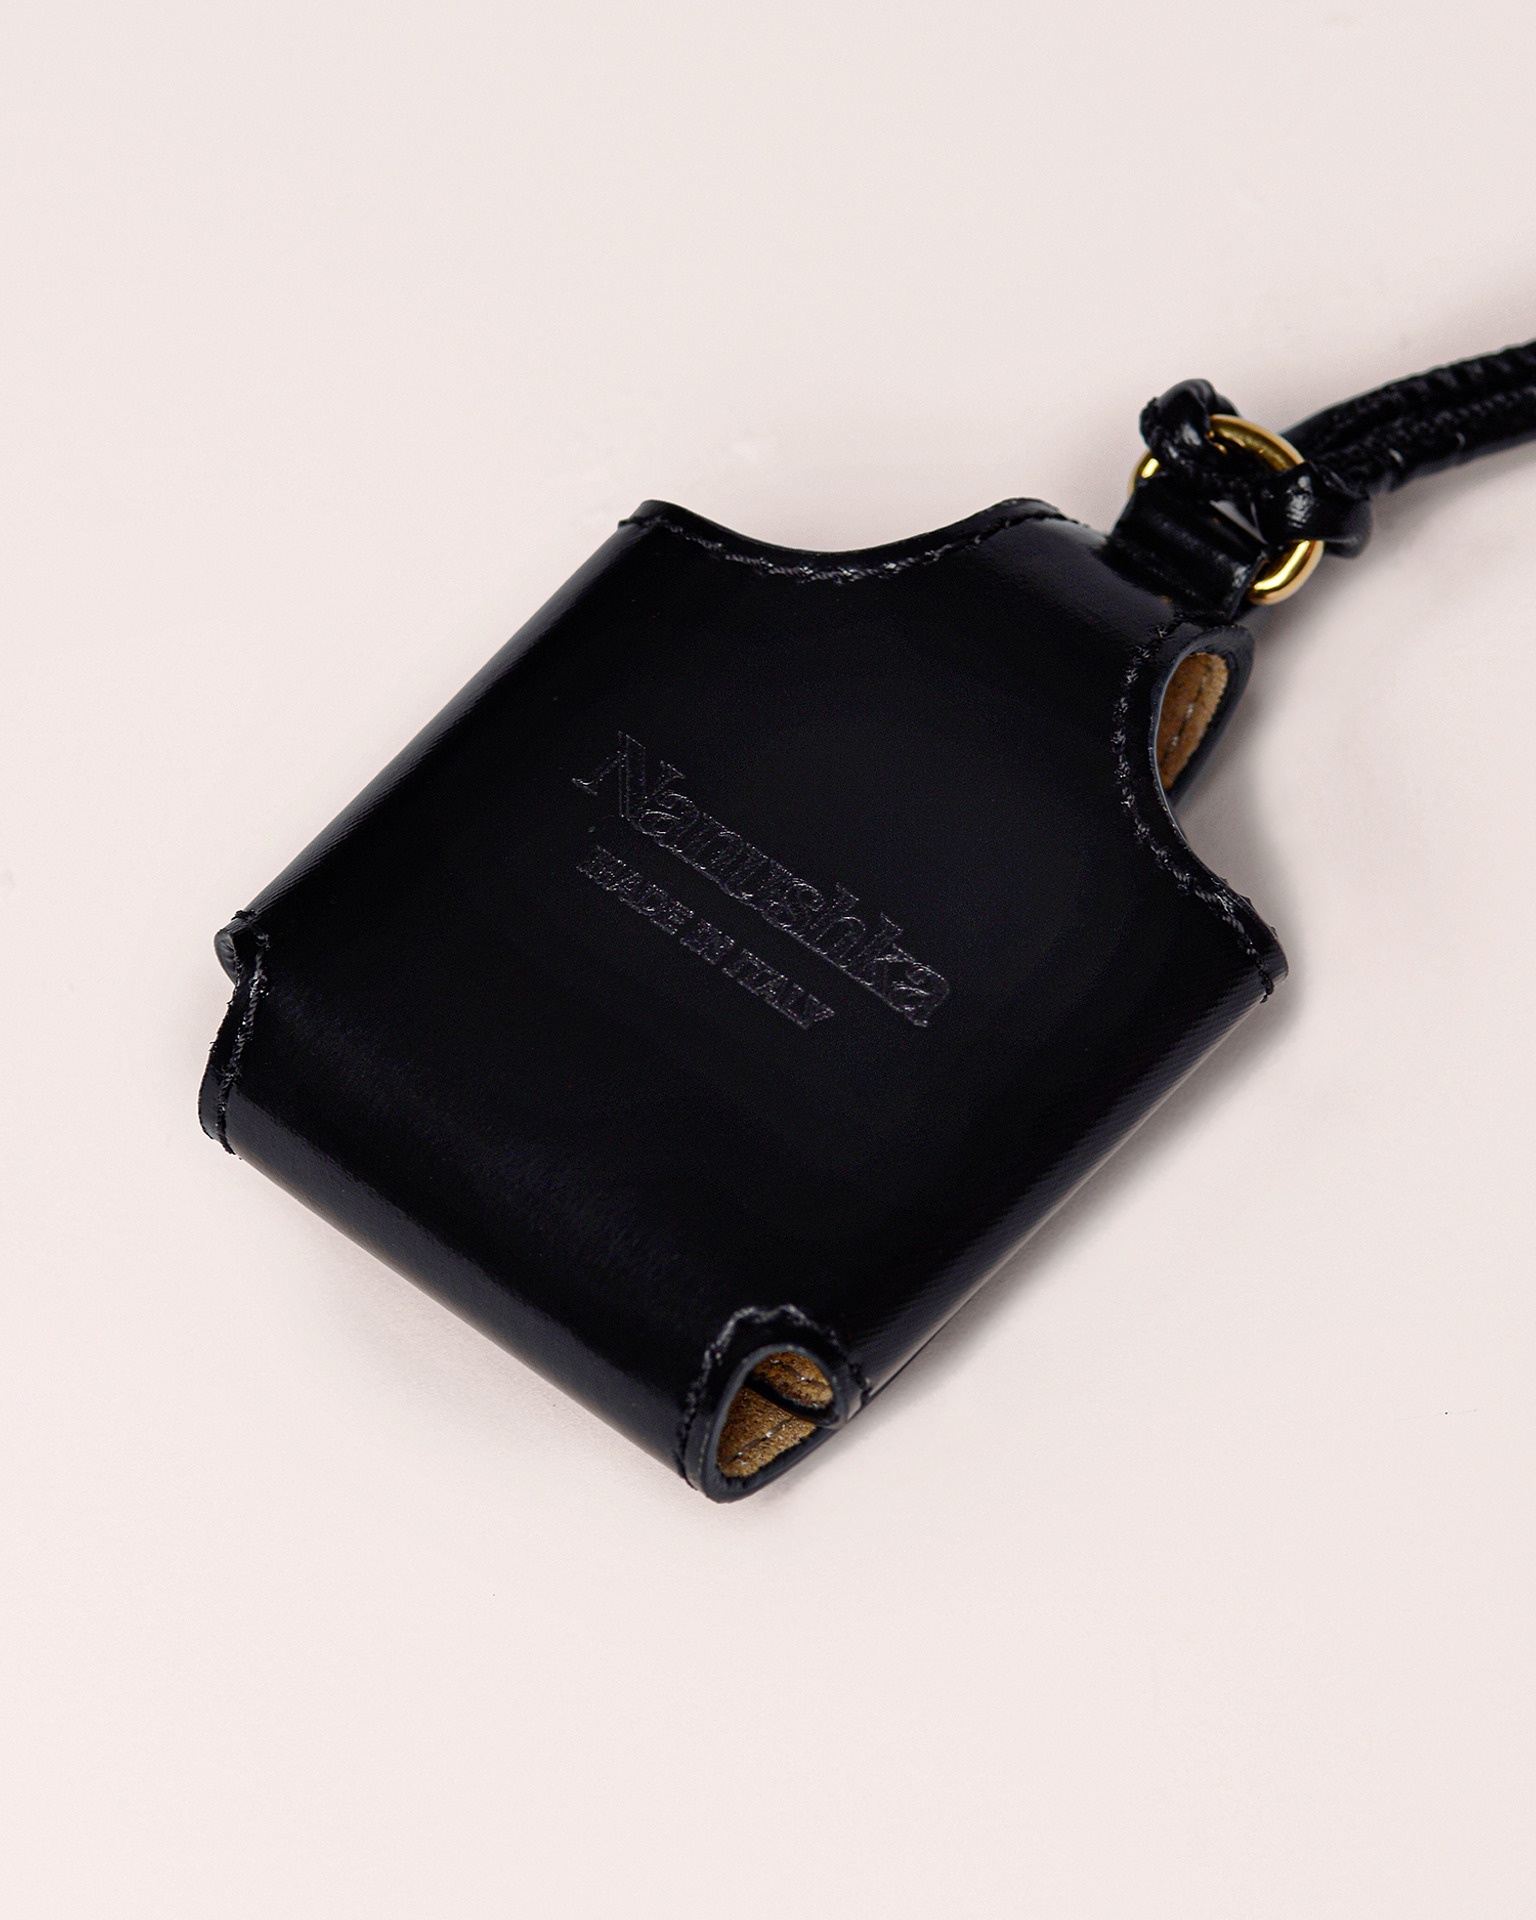 BOAZ - Patent vegan leather Airpods case - Black - 2